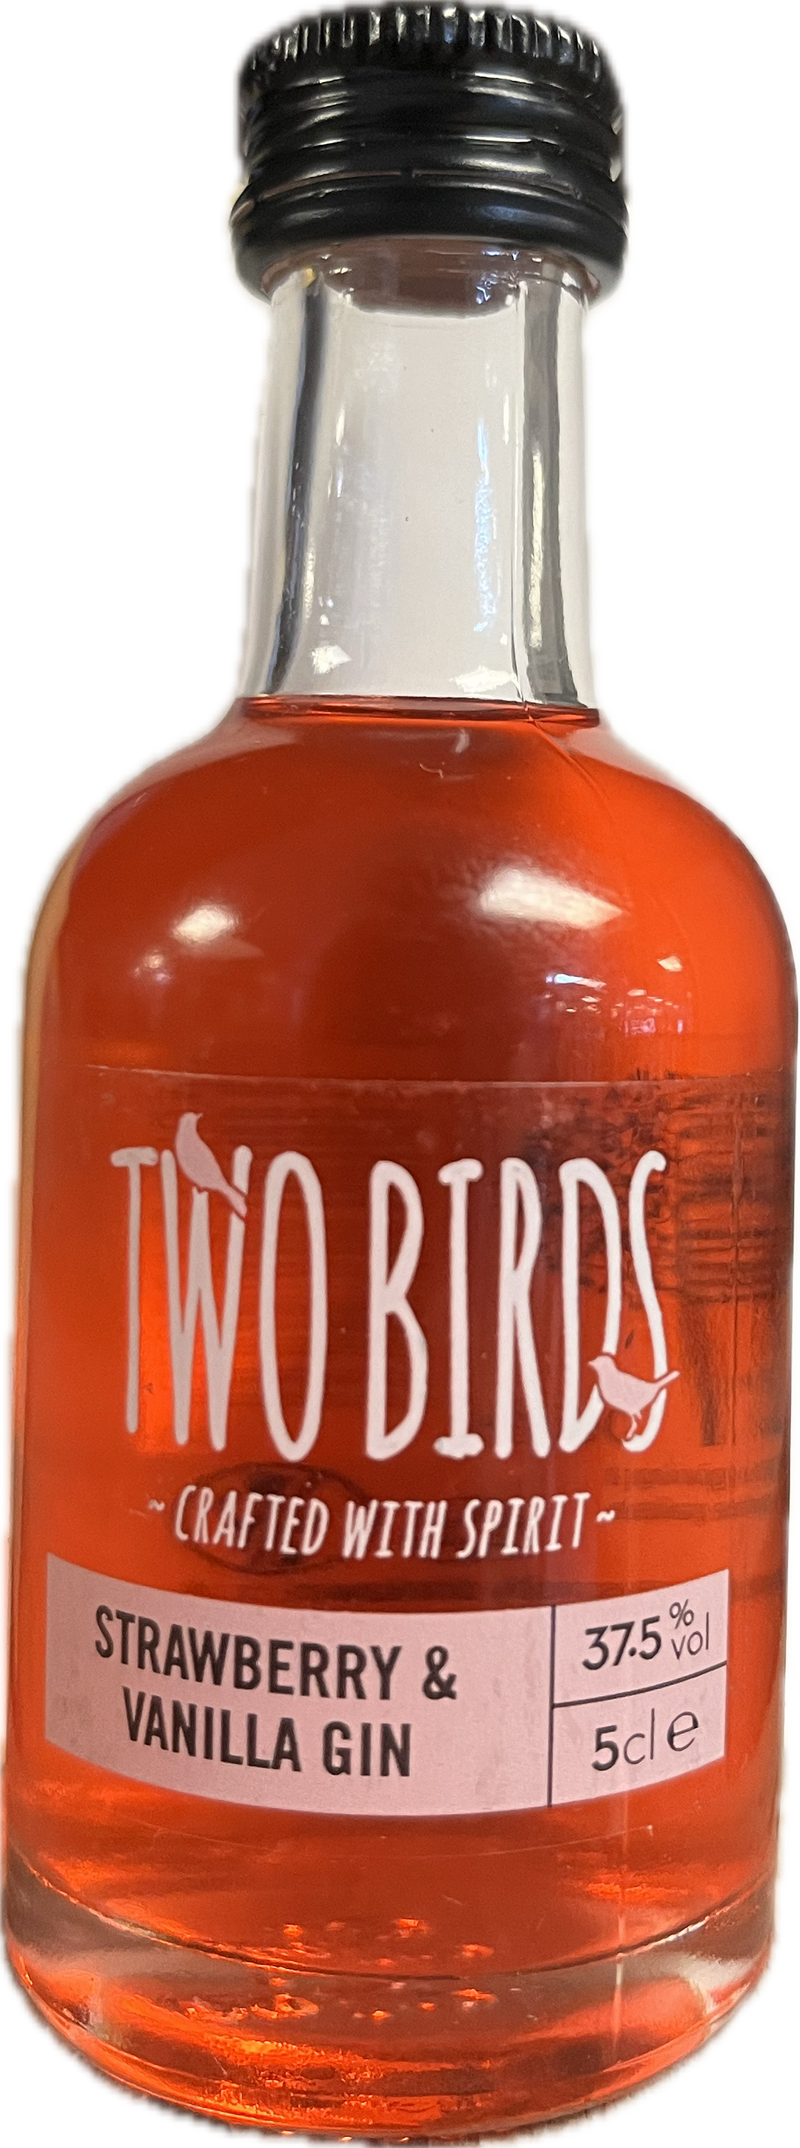 Two Birds Strawberry & Vanilla Gin 5cl